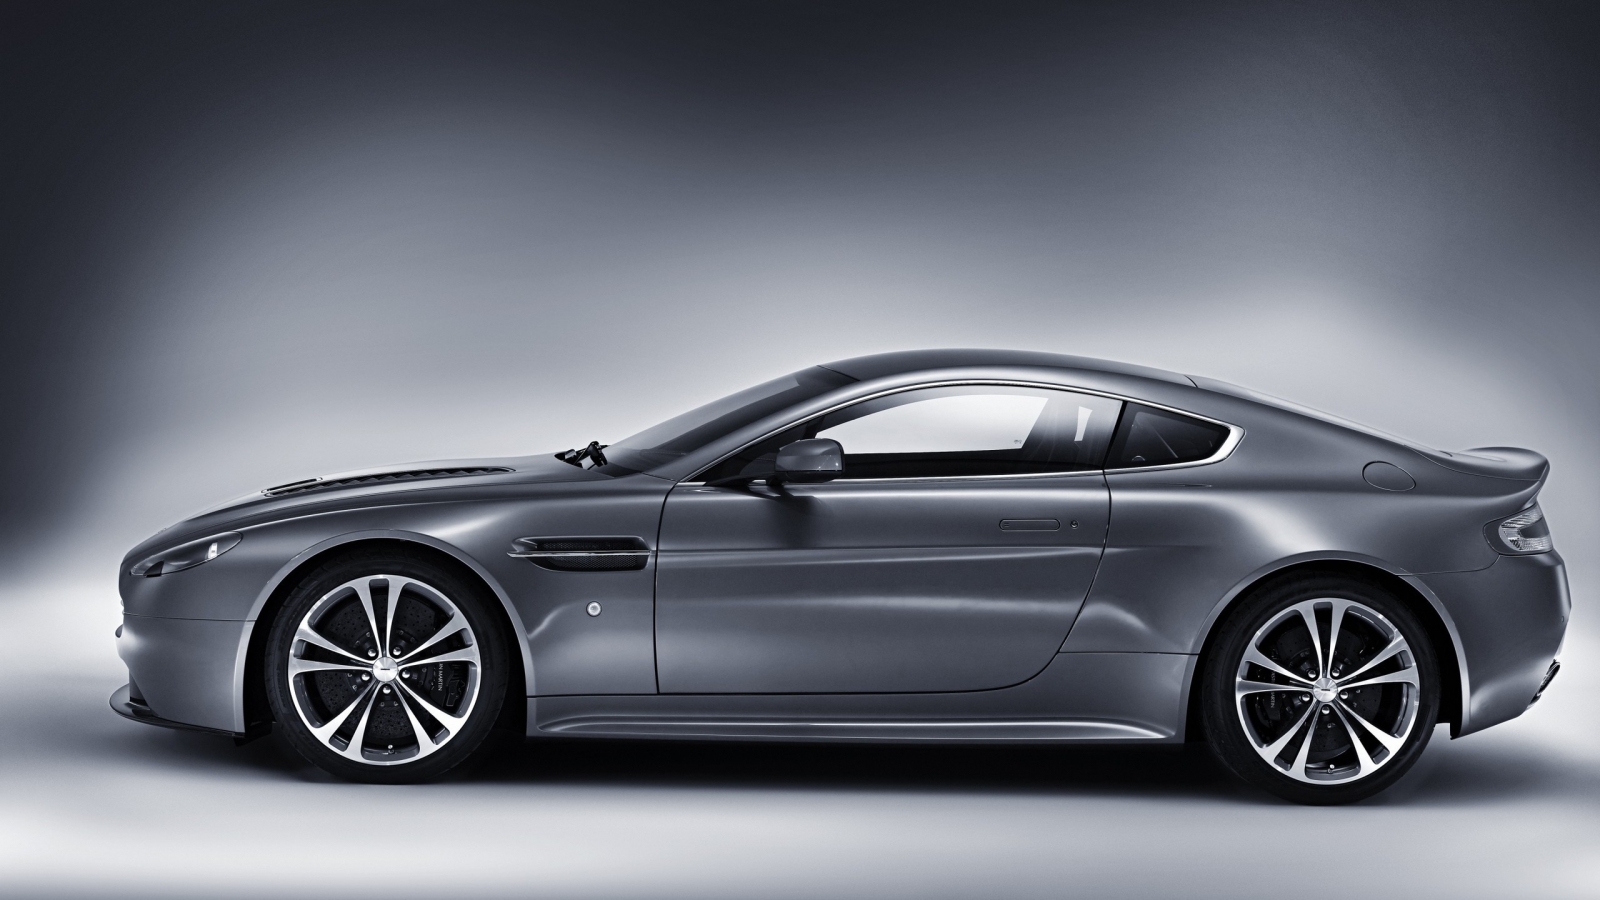 Aston Martin V12 Vantage Front View for 1600 x 900 HDTV resolution